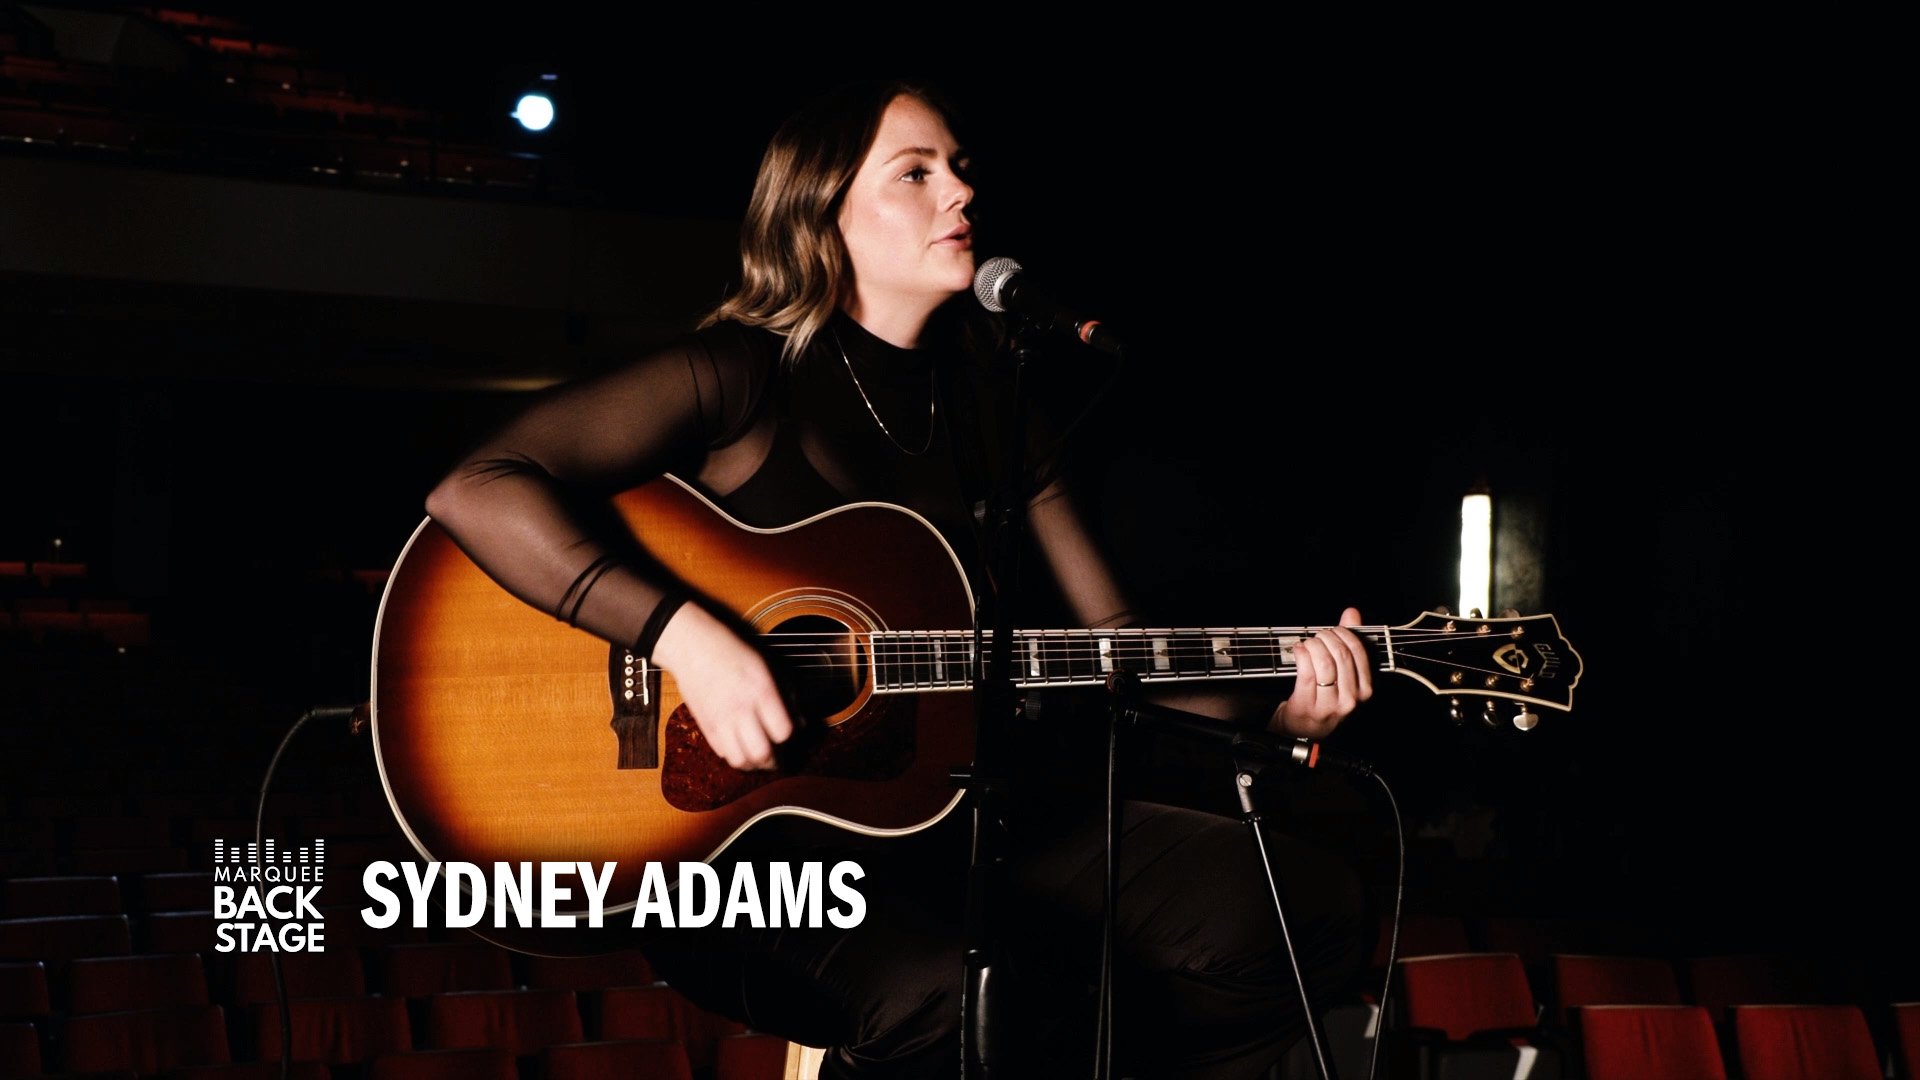 Marquee Backstage - Sydney Adams - WNKY News 40 Television